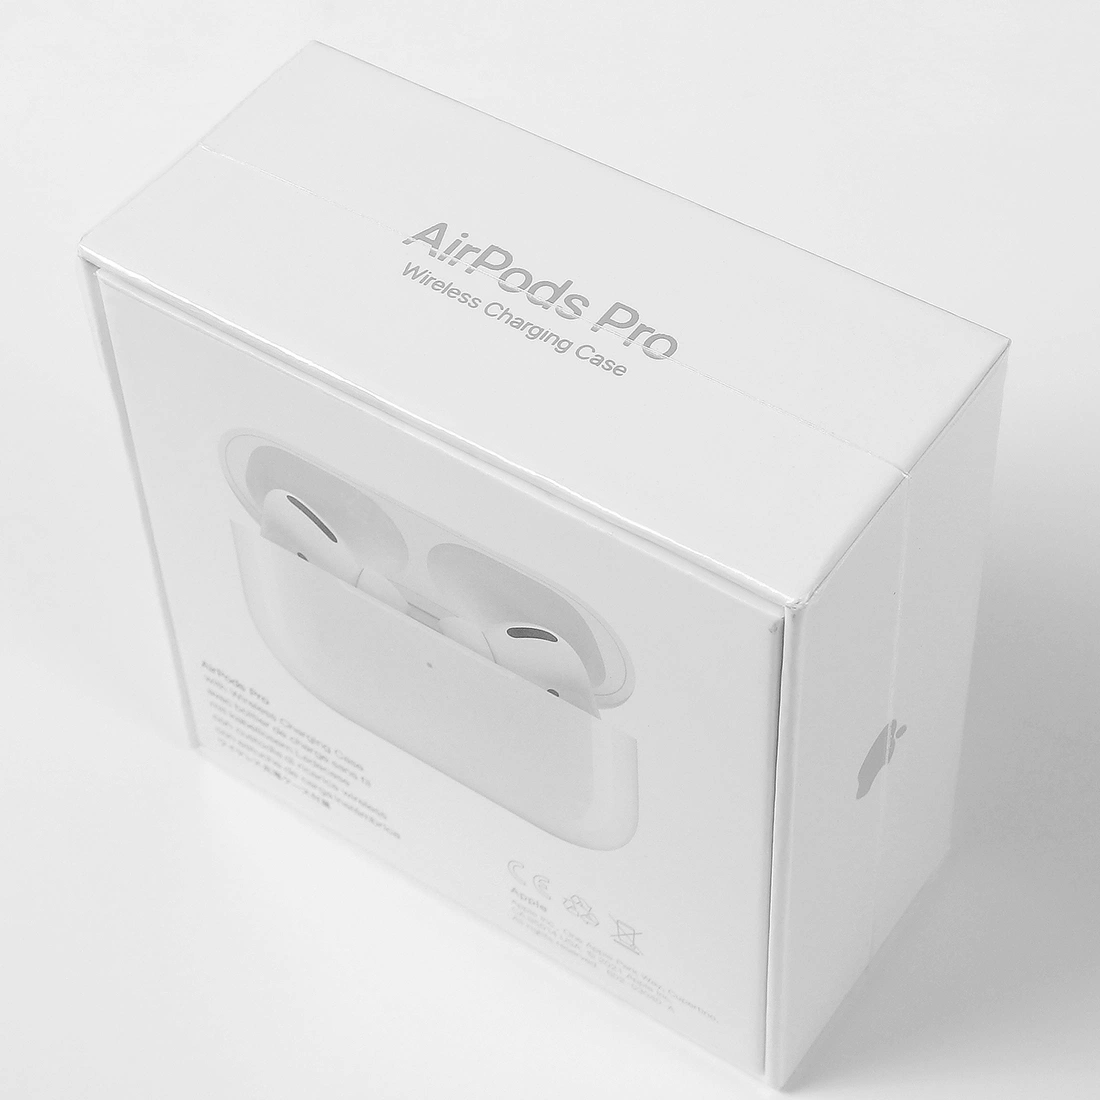 Calidad superior 1: 1 Airpods'S PRO 2 3 Max Moda auricular Max inalámbrico Bluetooth reducción de ruido auriculares auricular auricular Airpod PRO 2 3 Max